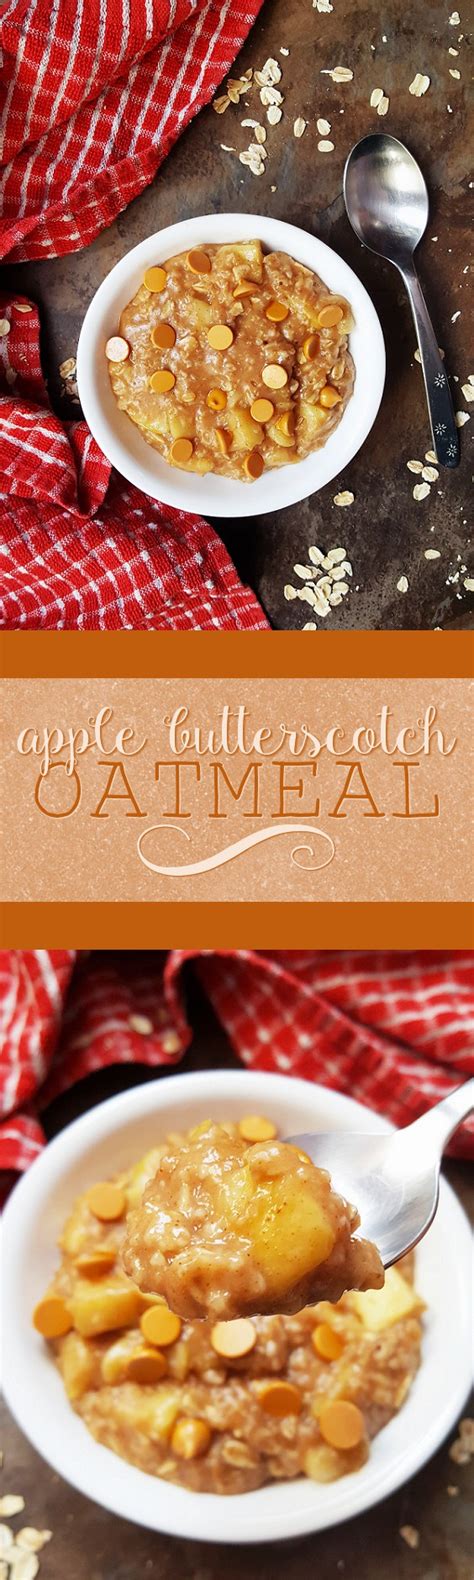 How many calories should i eat? Apple Butterscotch Oatmeal | Food, Healthy breakfast ...